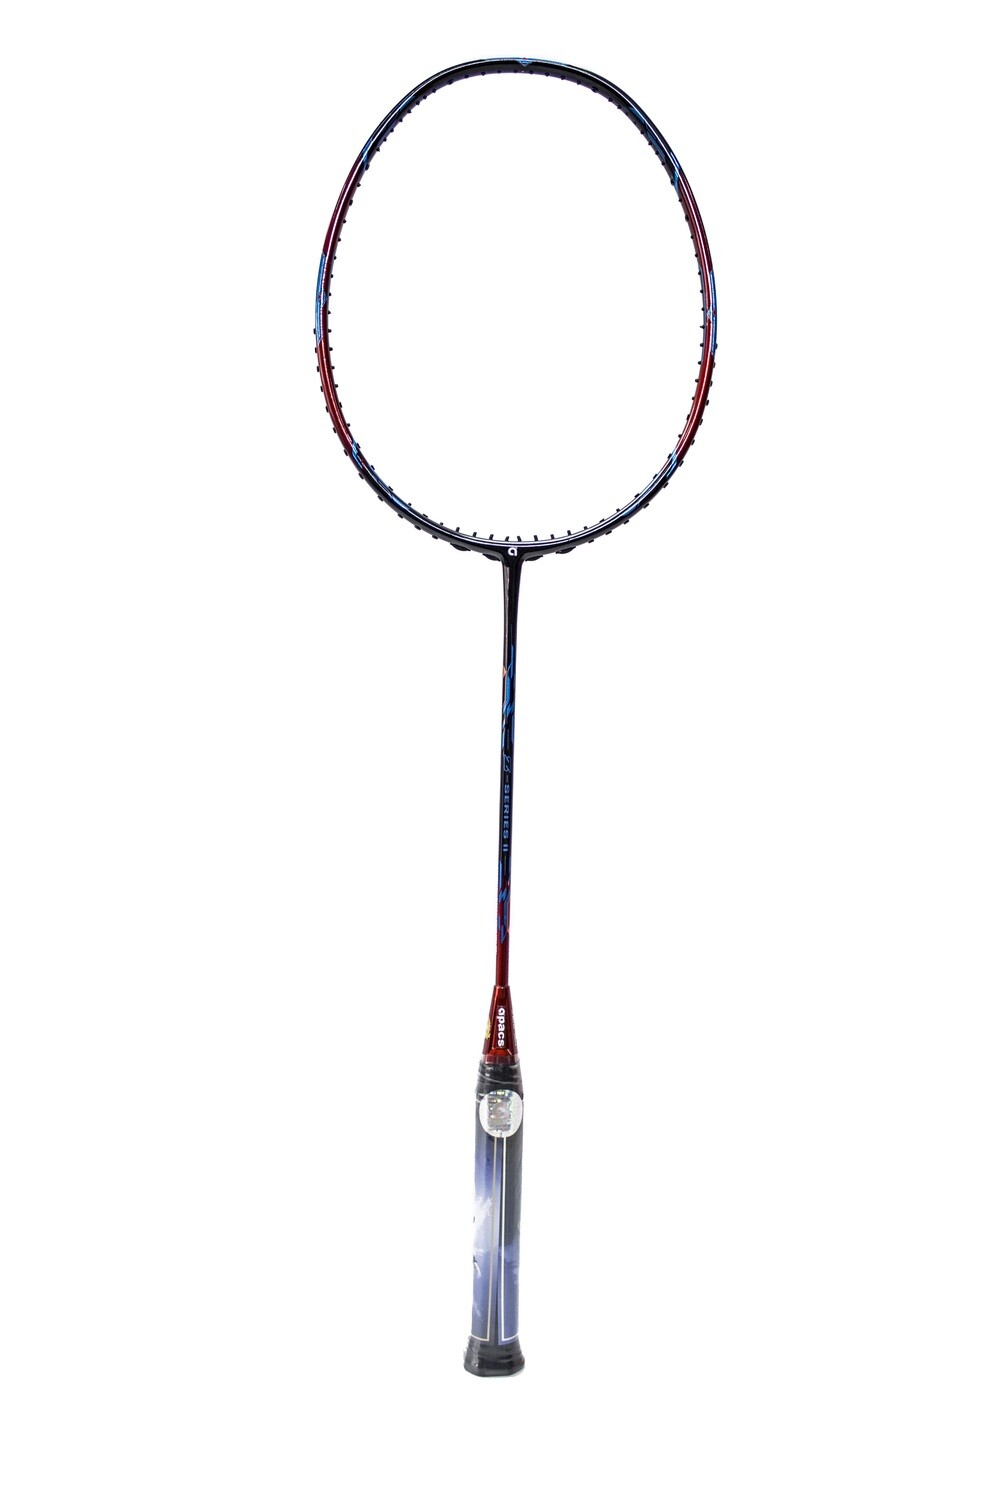 Apacs Z Series II Red Badminton Racquet